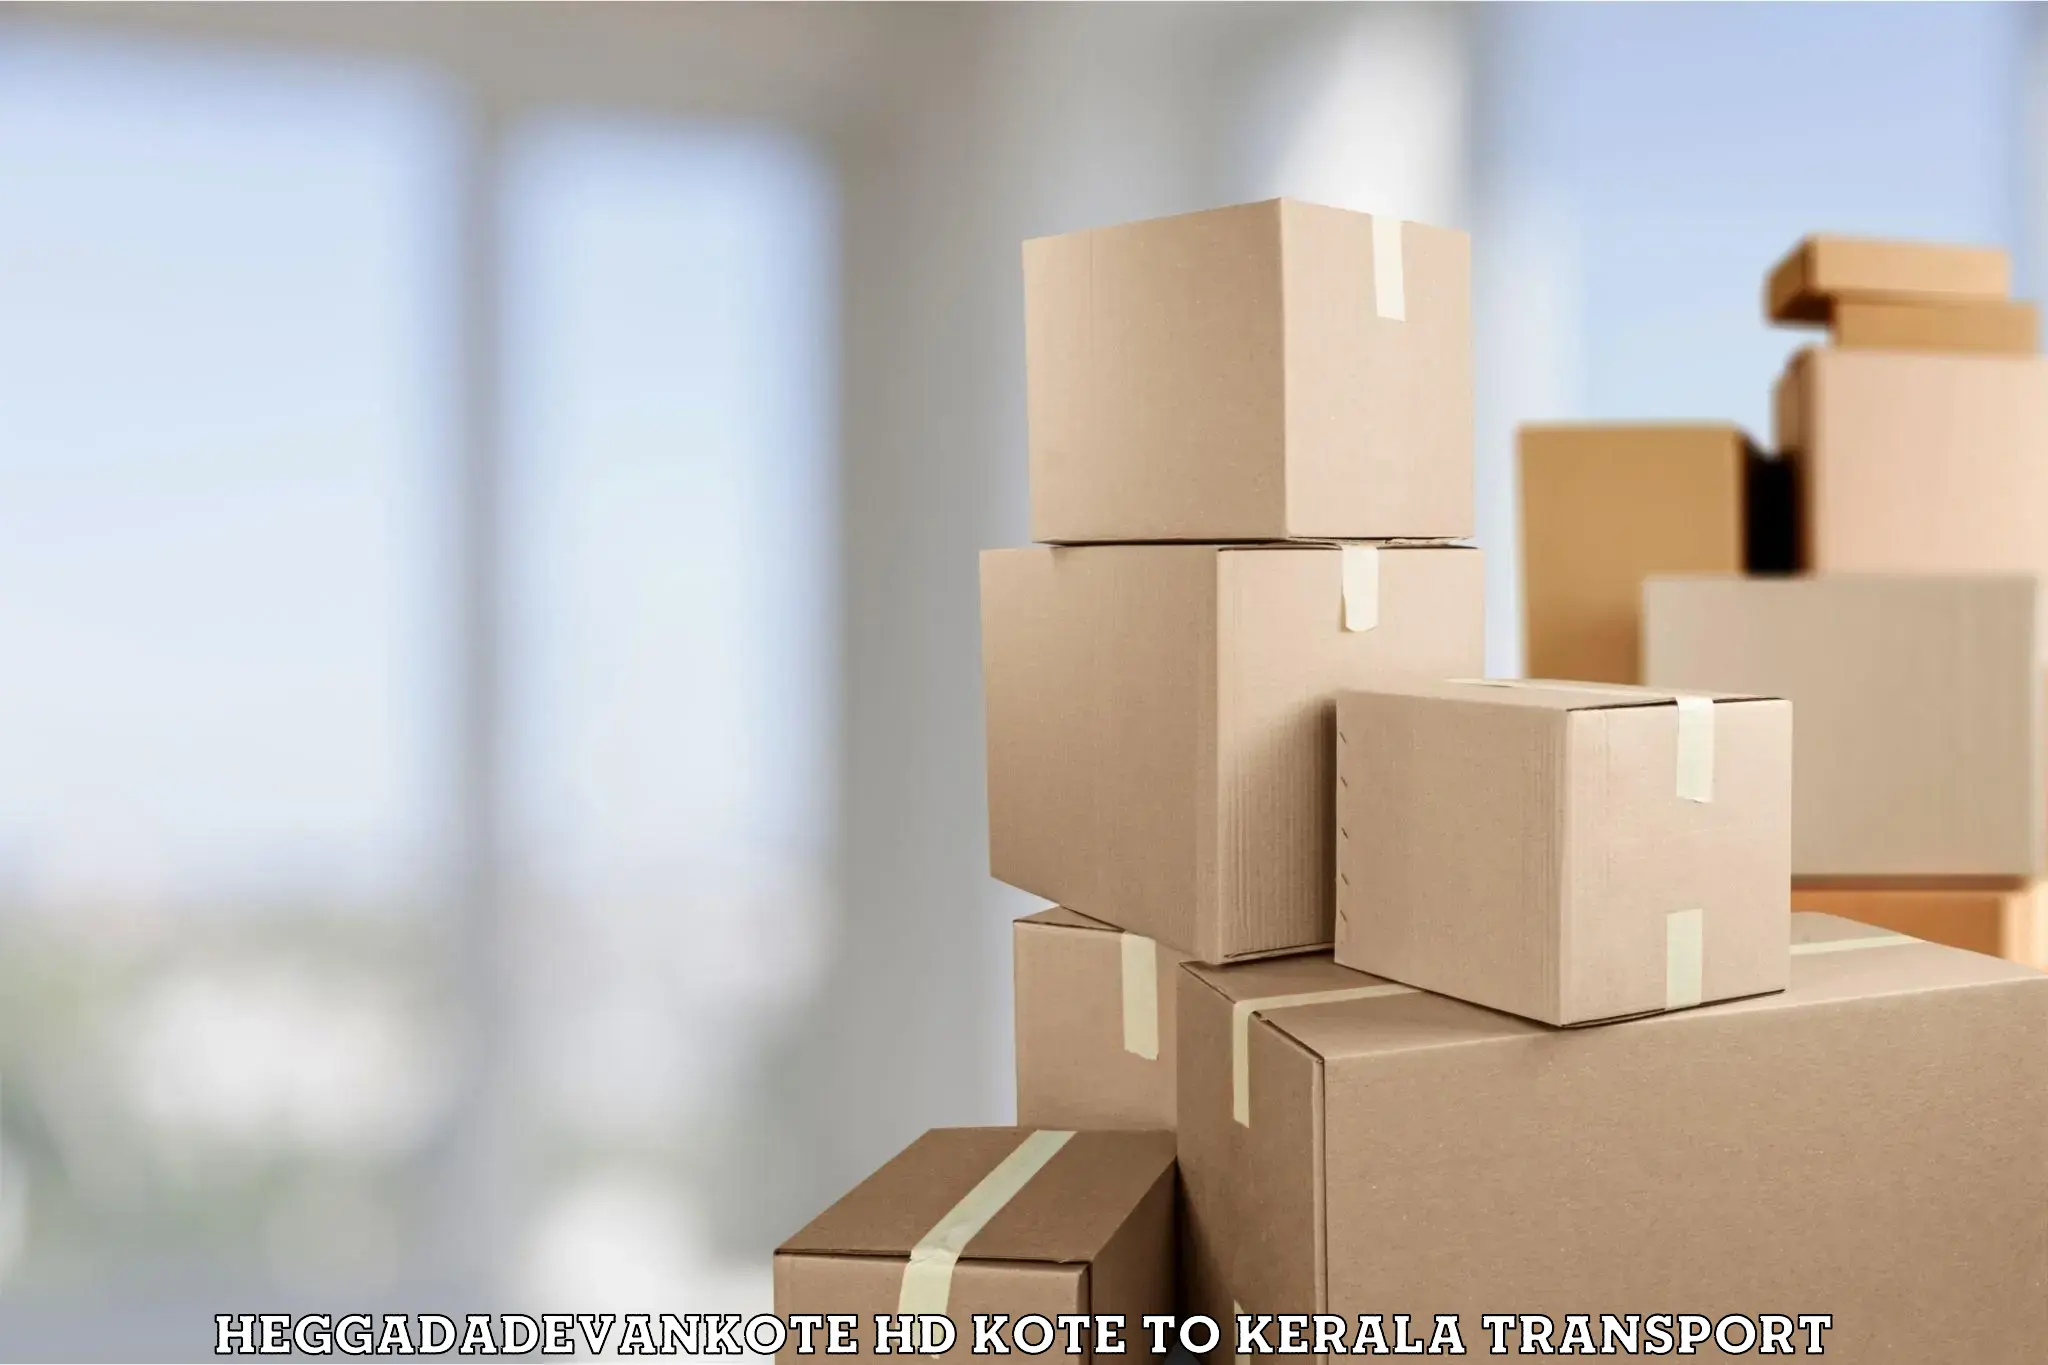 Goods delivery service Heggadadevankote HD Kote to Calicut